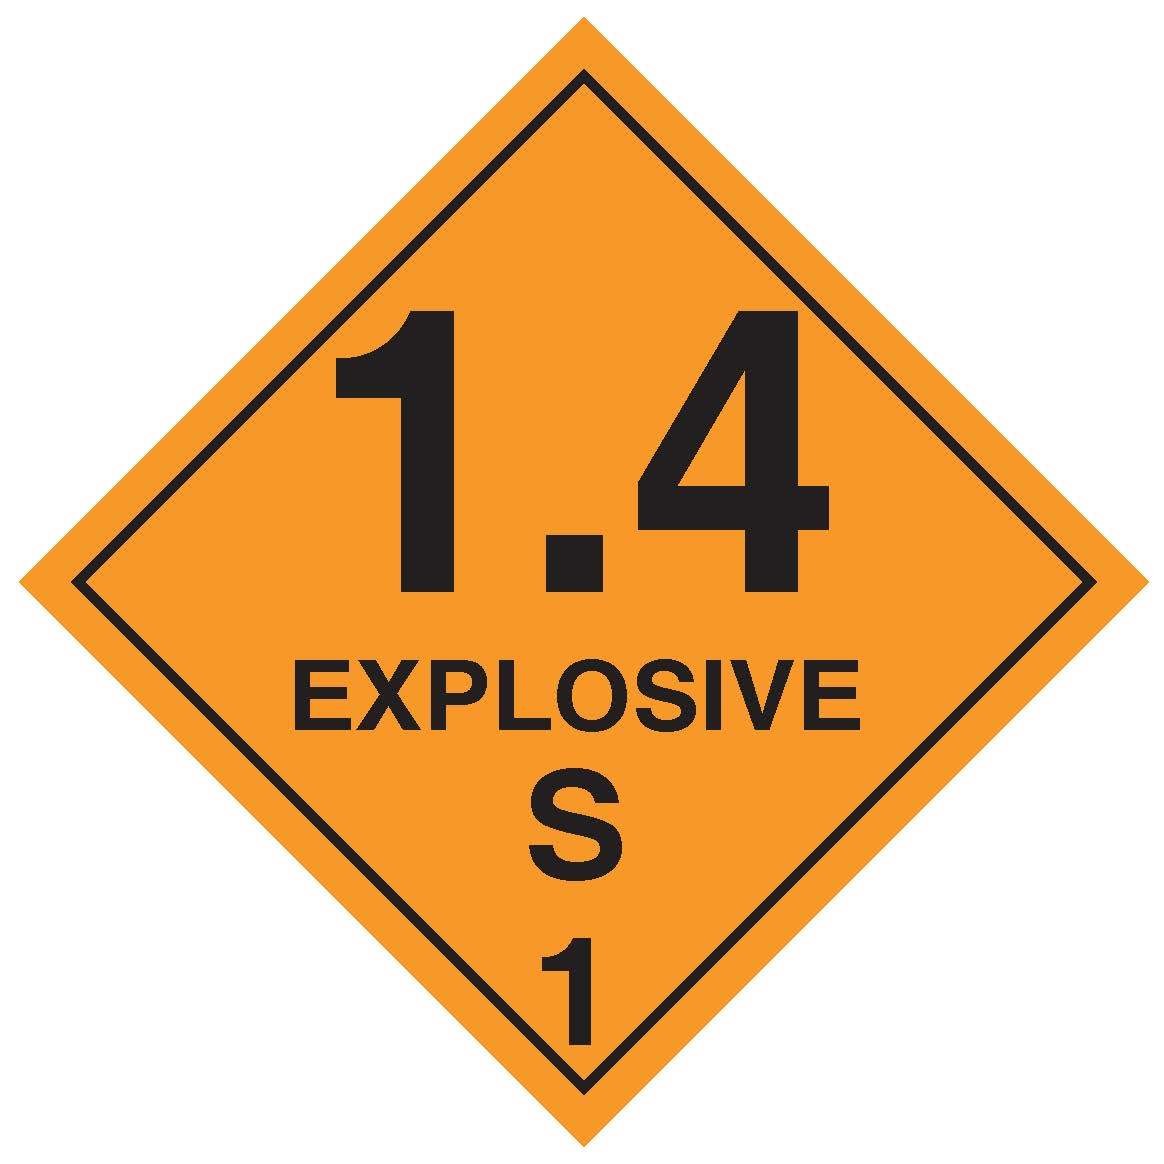 Explosive 1.4 S